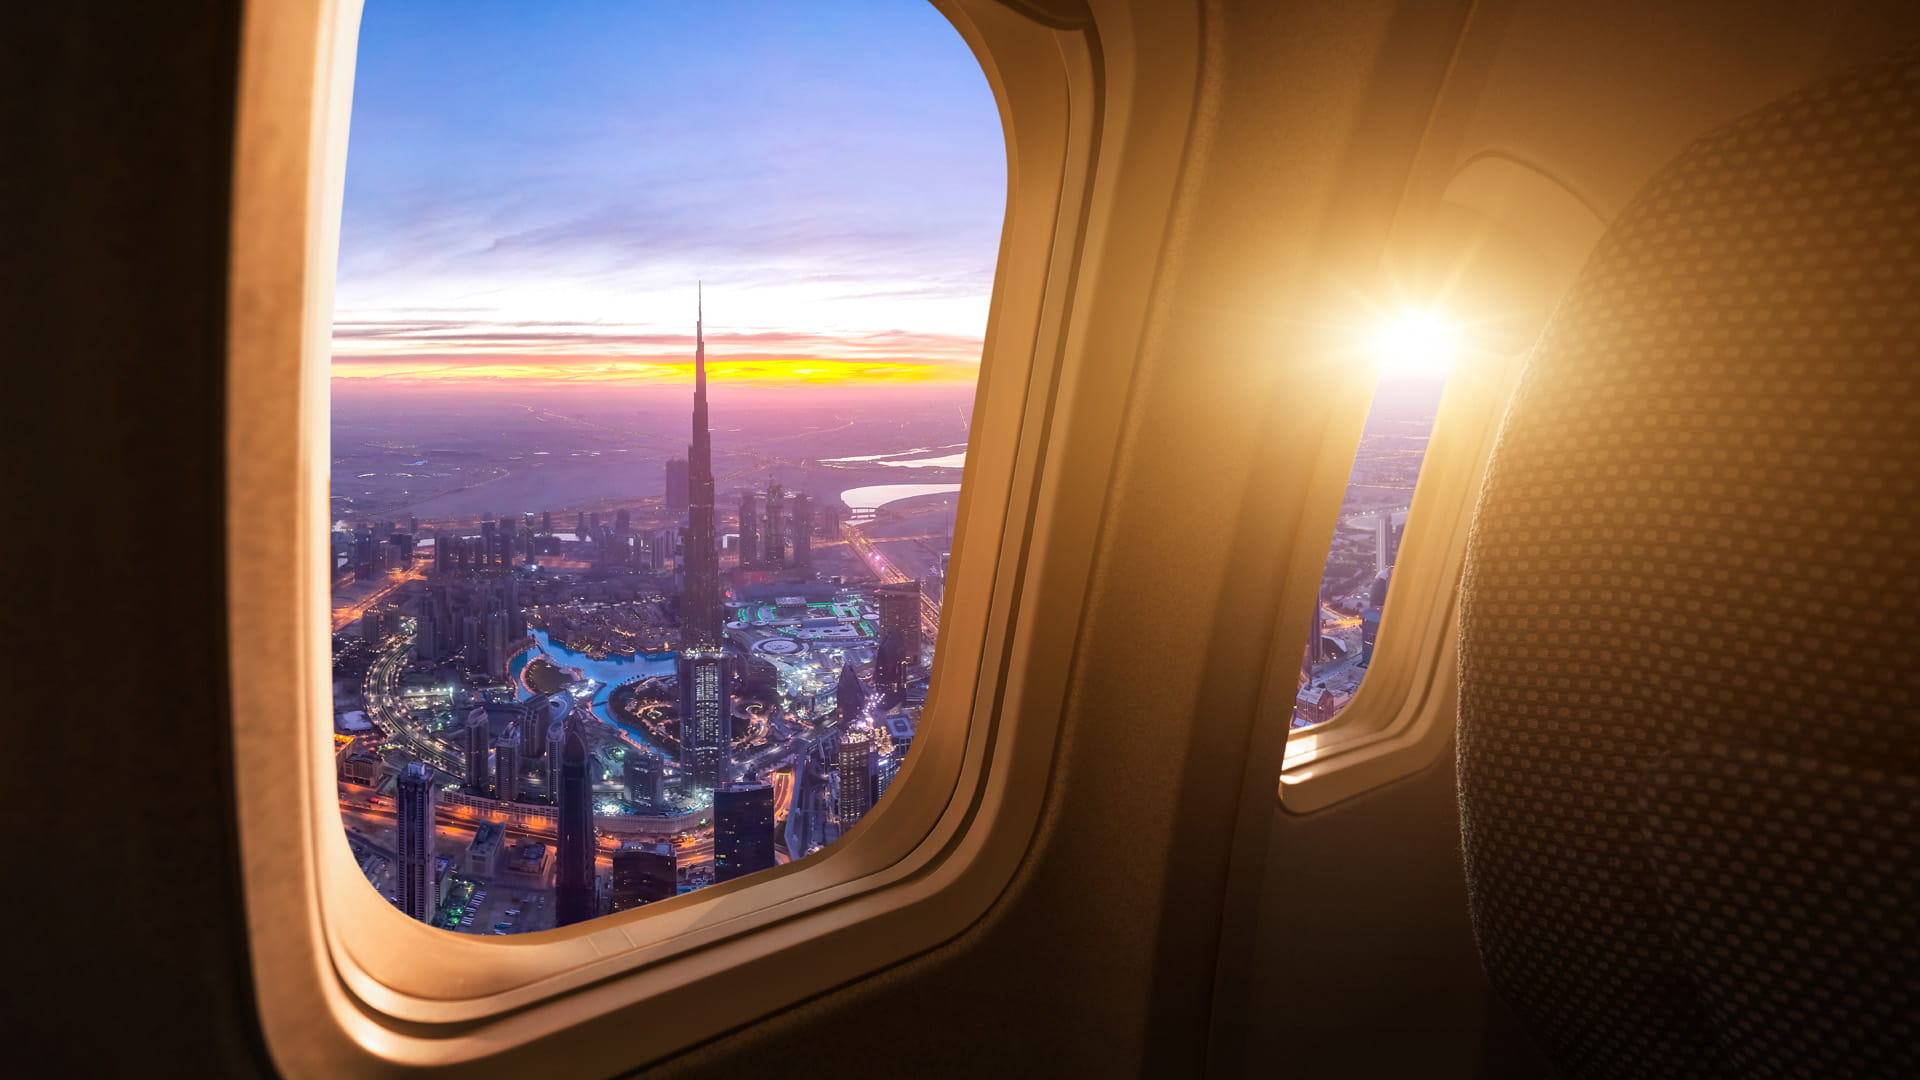 Dubai city scene outside airplane window